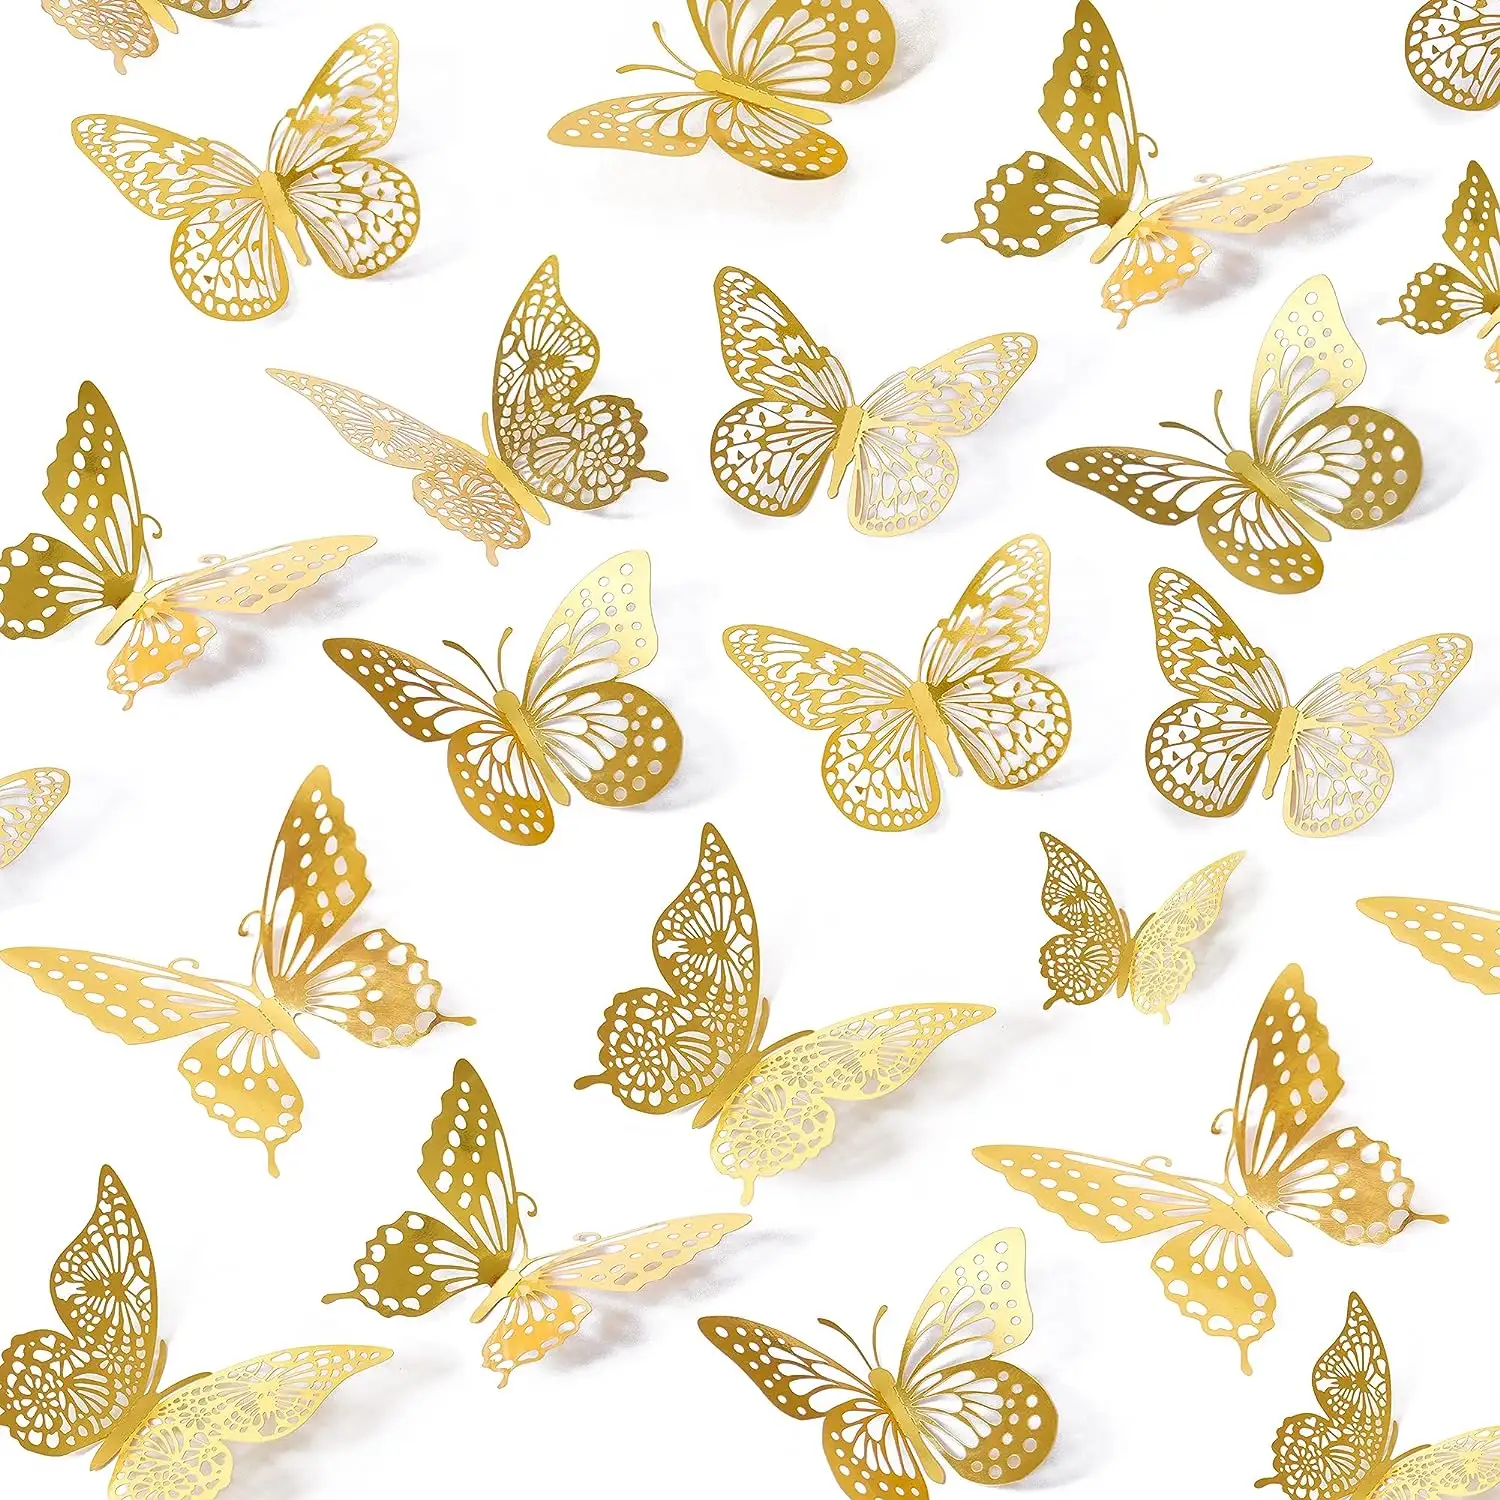 3D металлическая бабочка Настенный Декор 3d Бабочка съемные наклейки на стену украшения для вечеринки